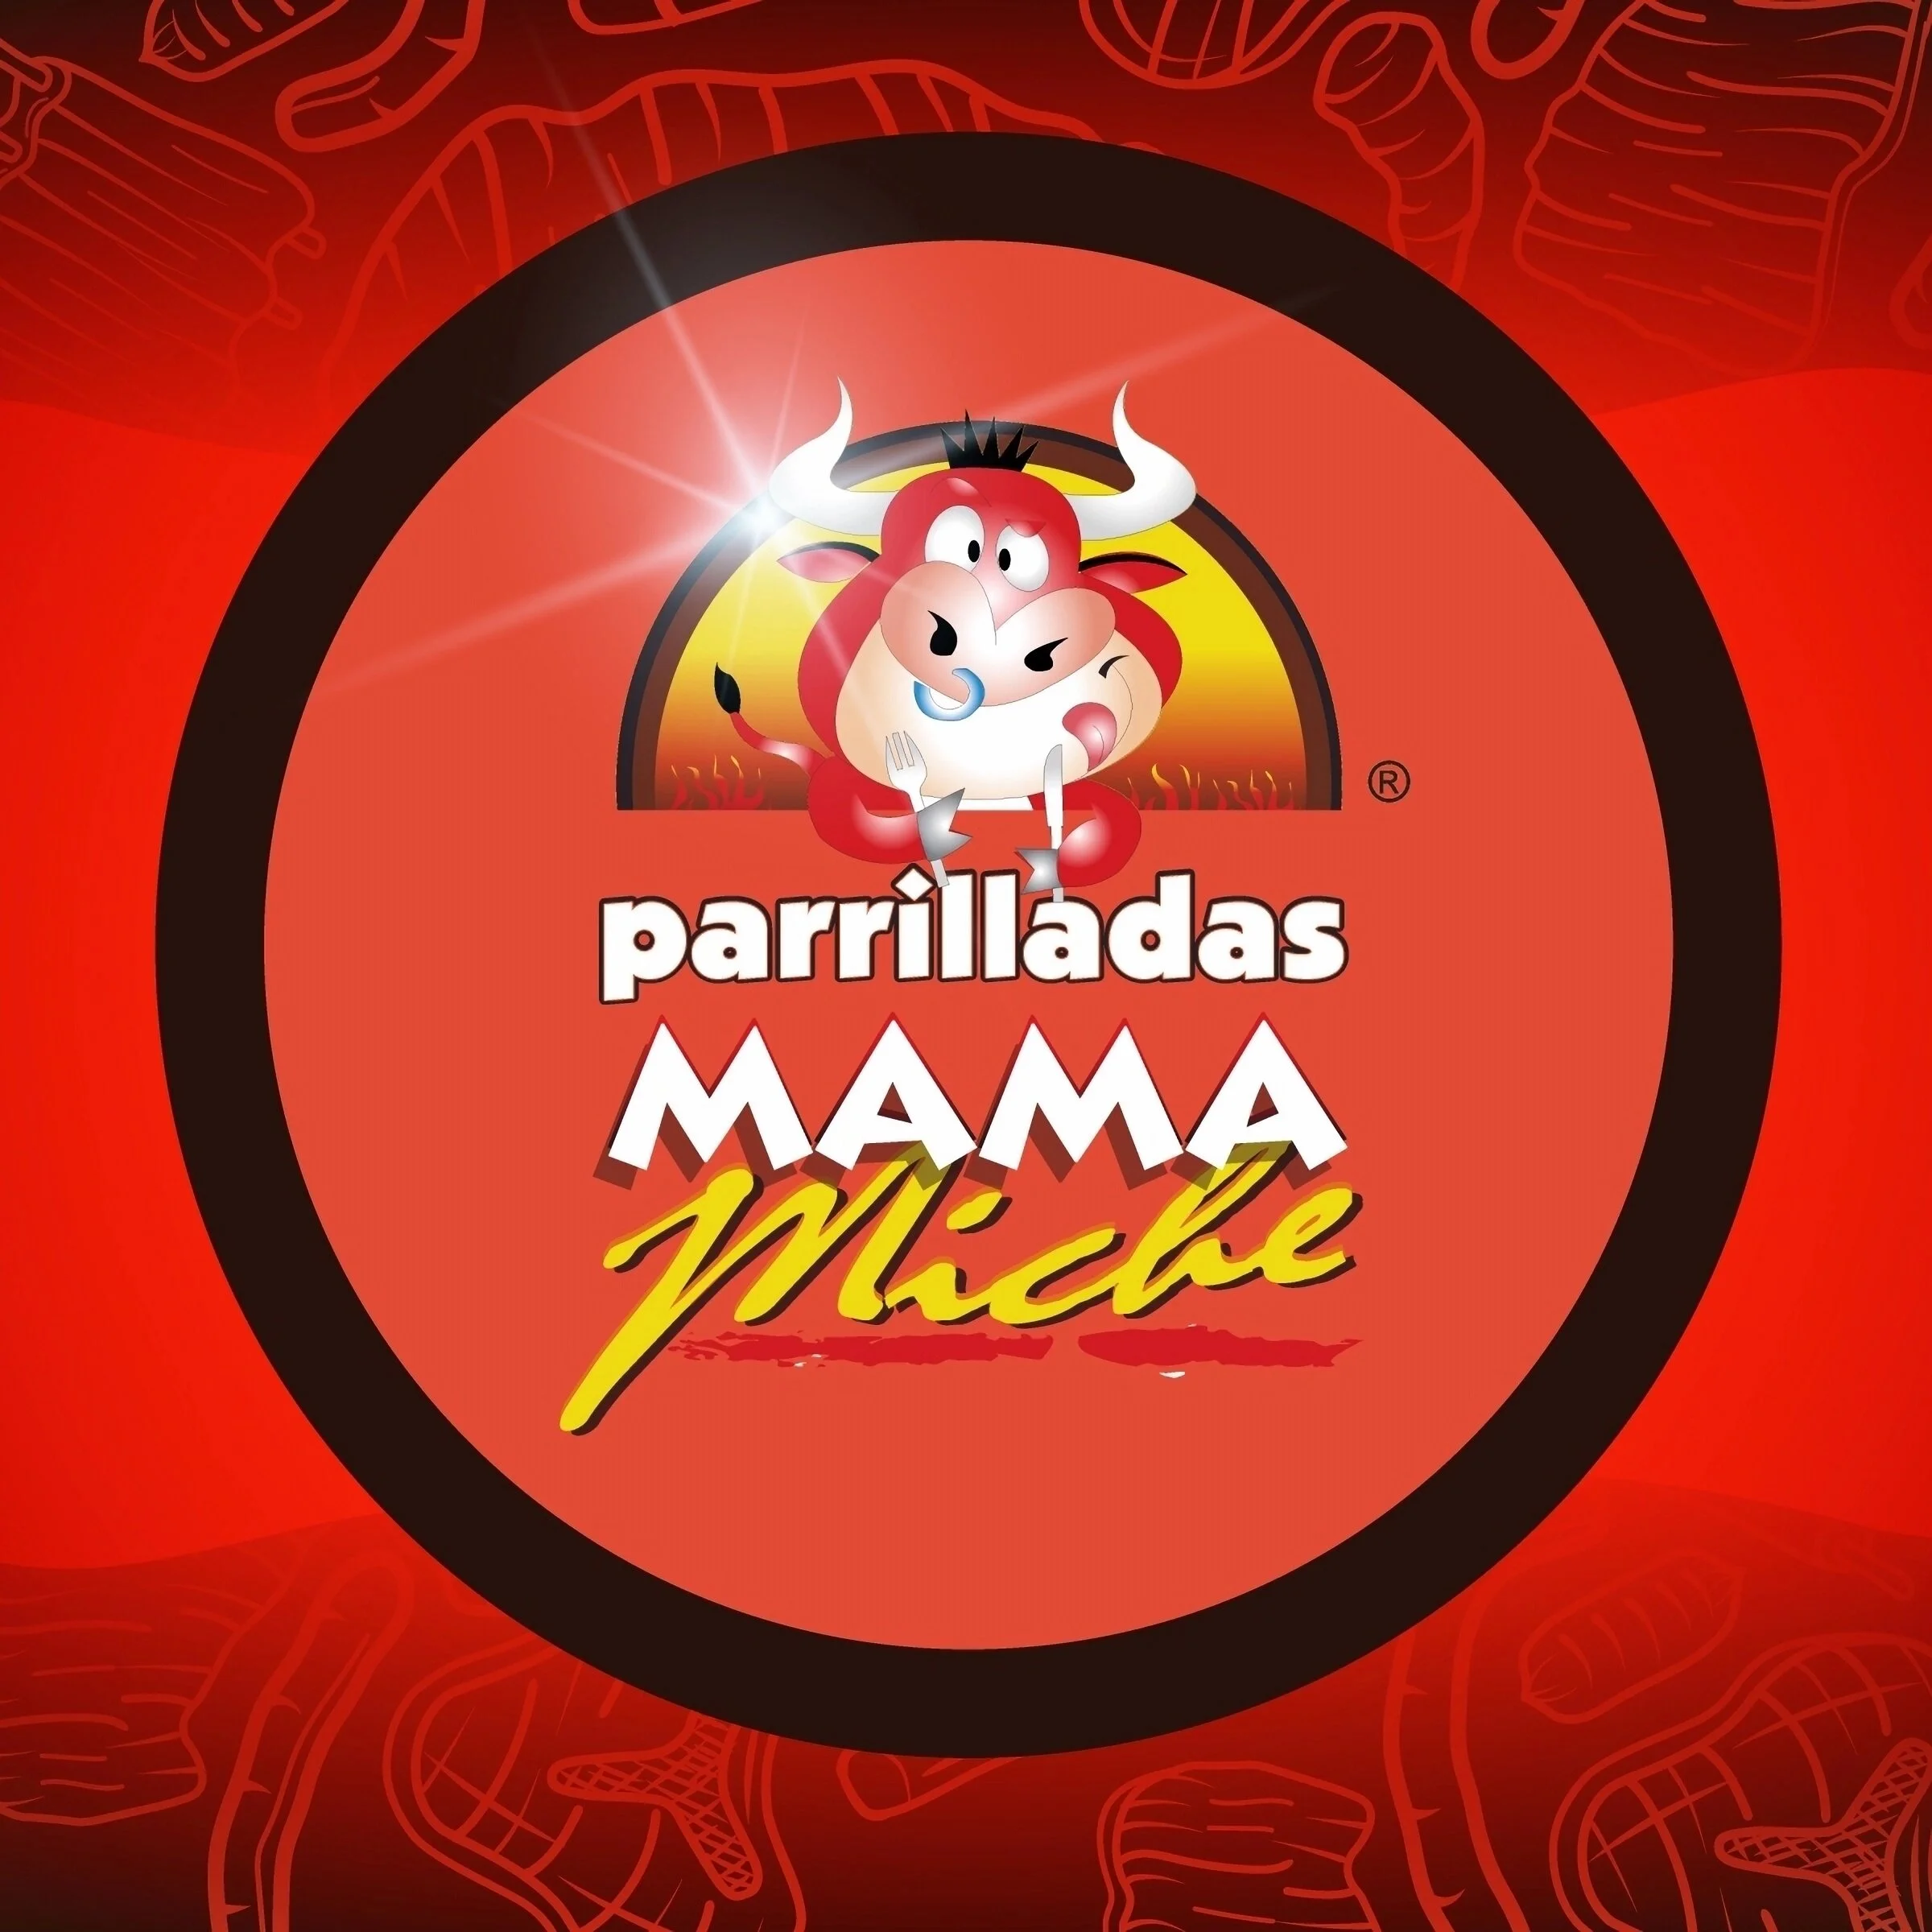 Restaurantes-mama-miche-parrilladas-18258